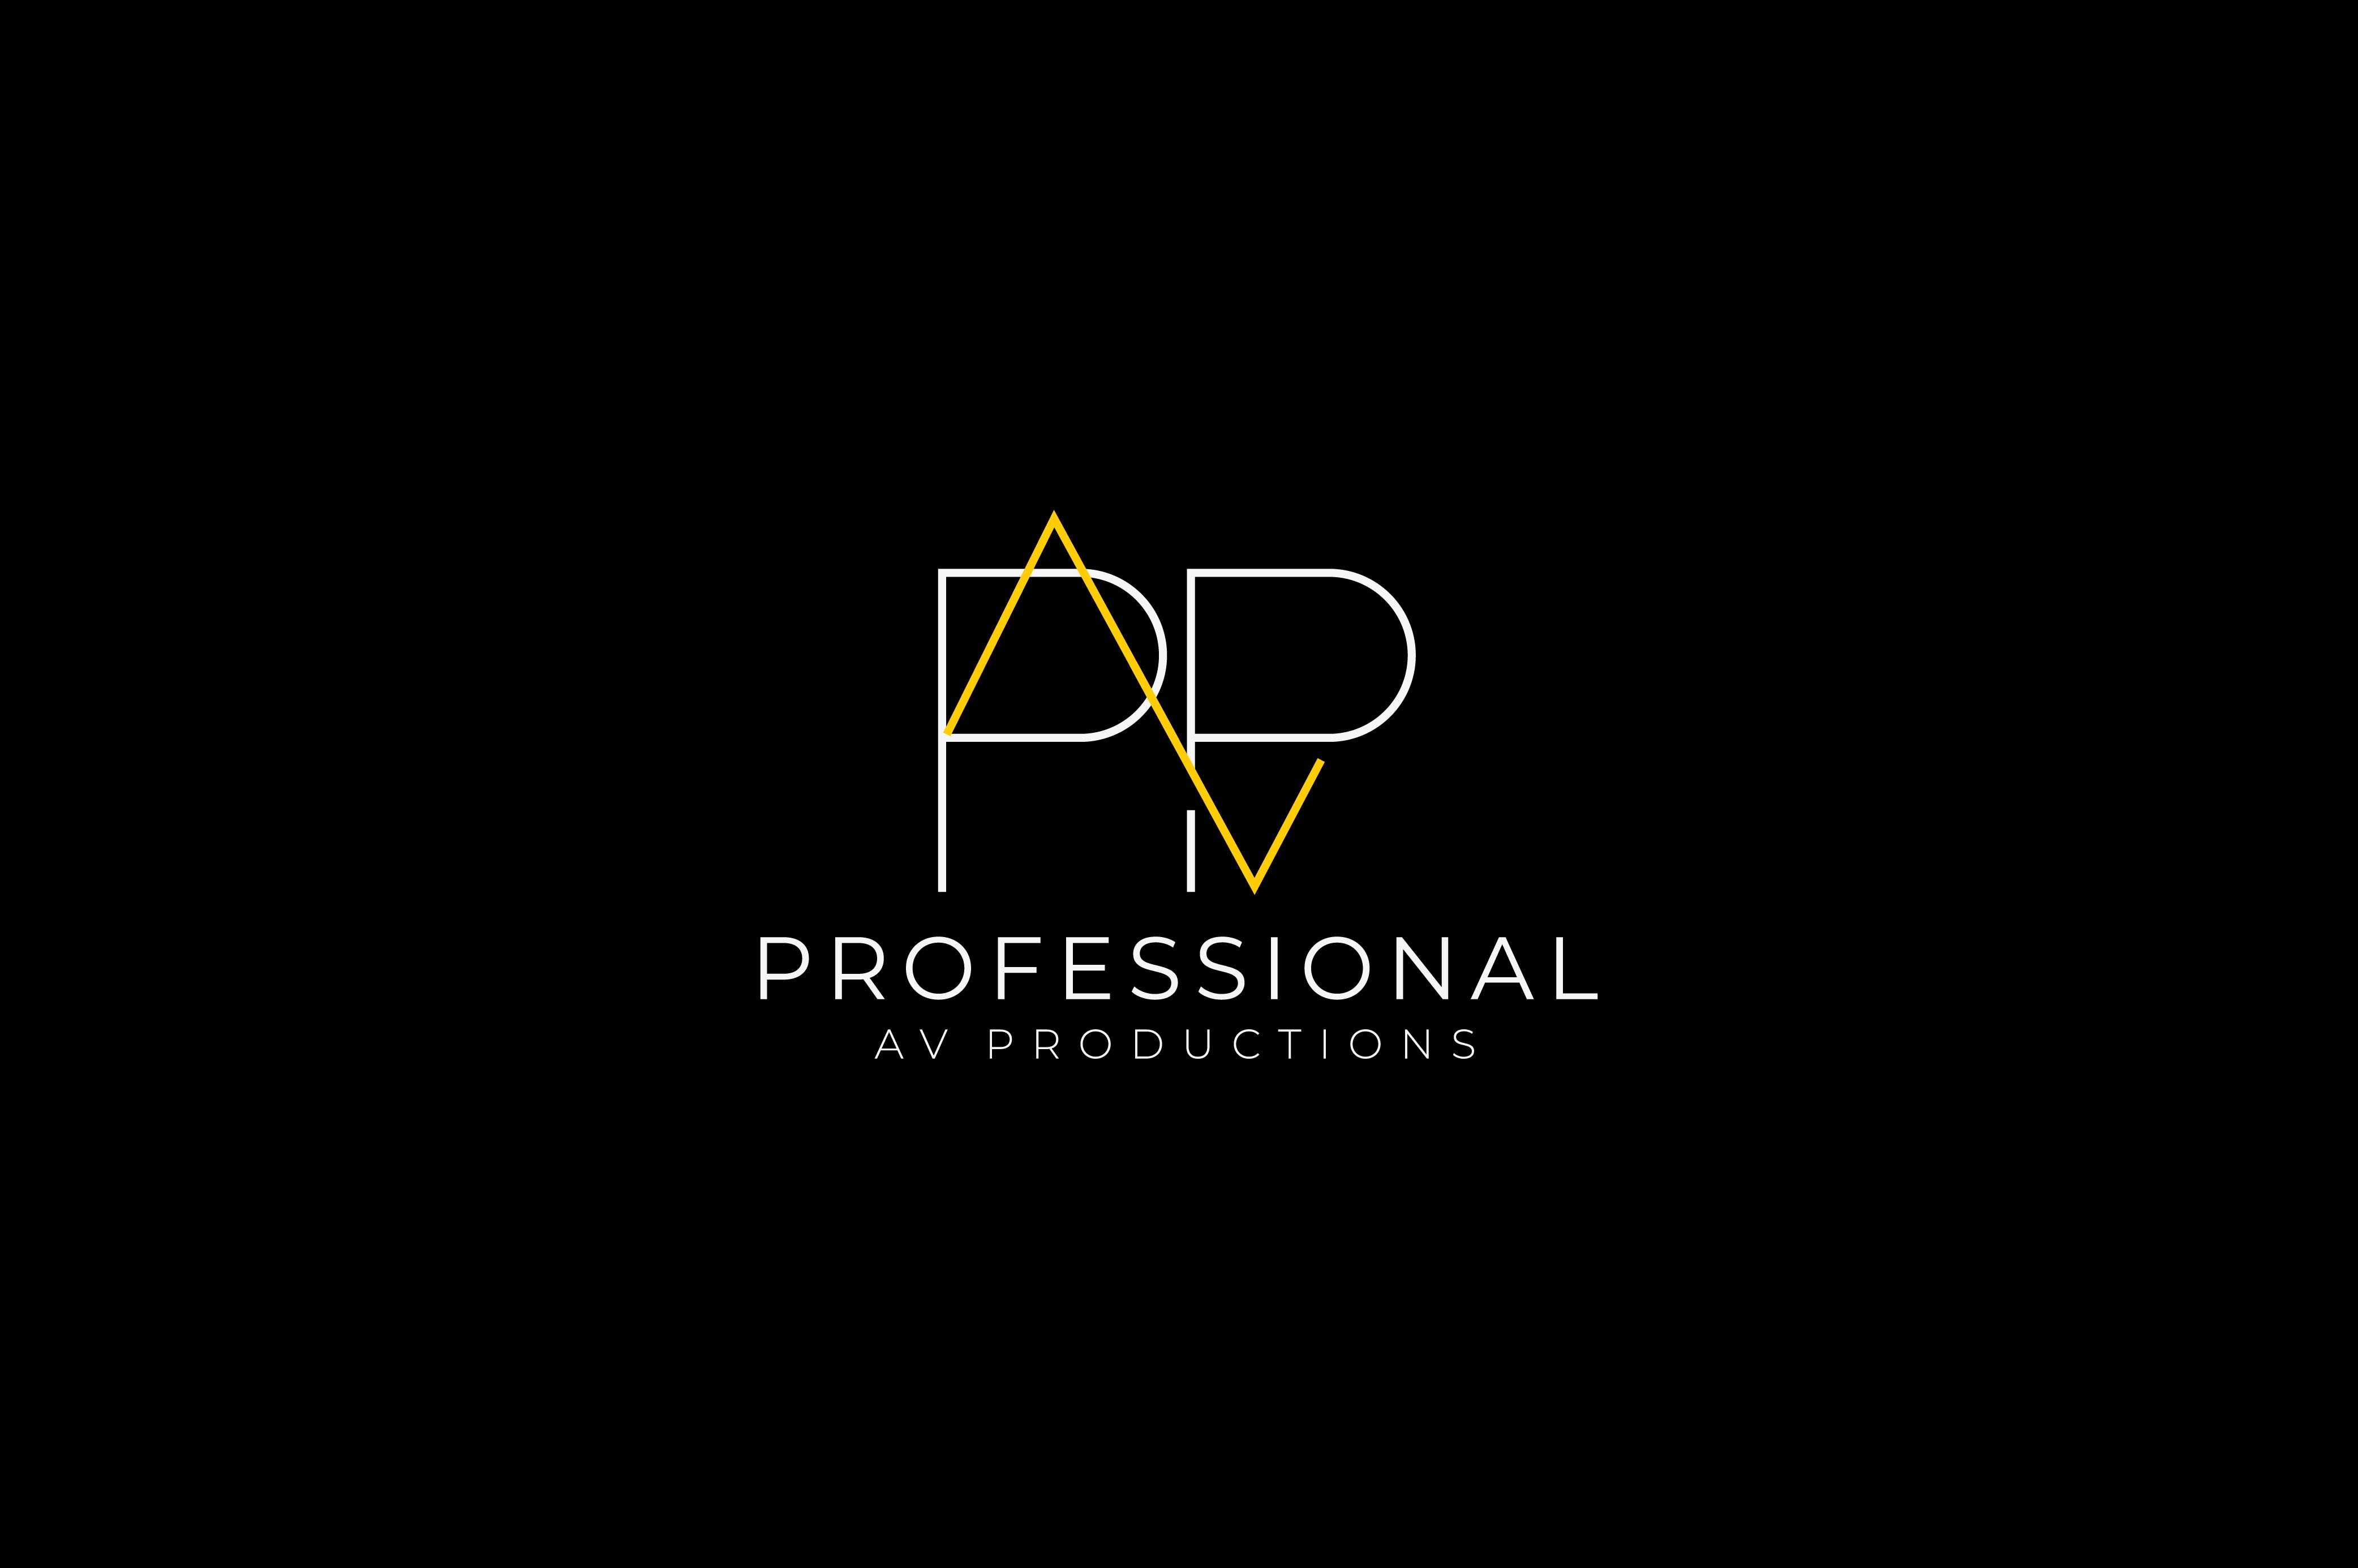 Professional AV Productions